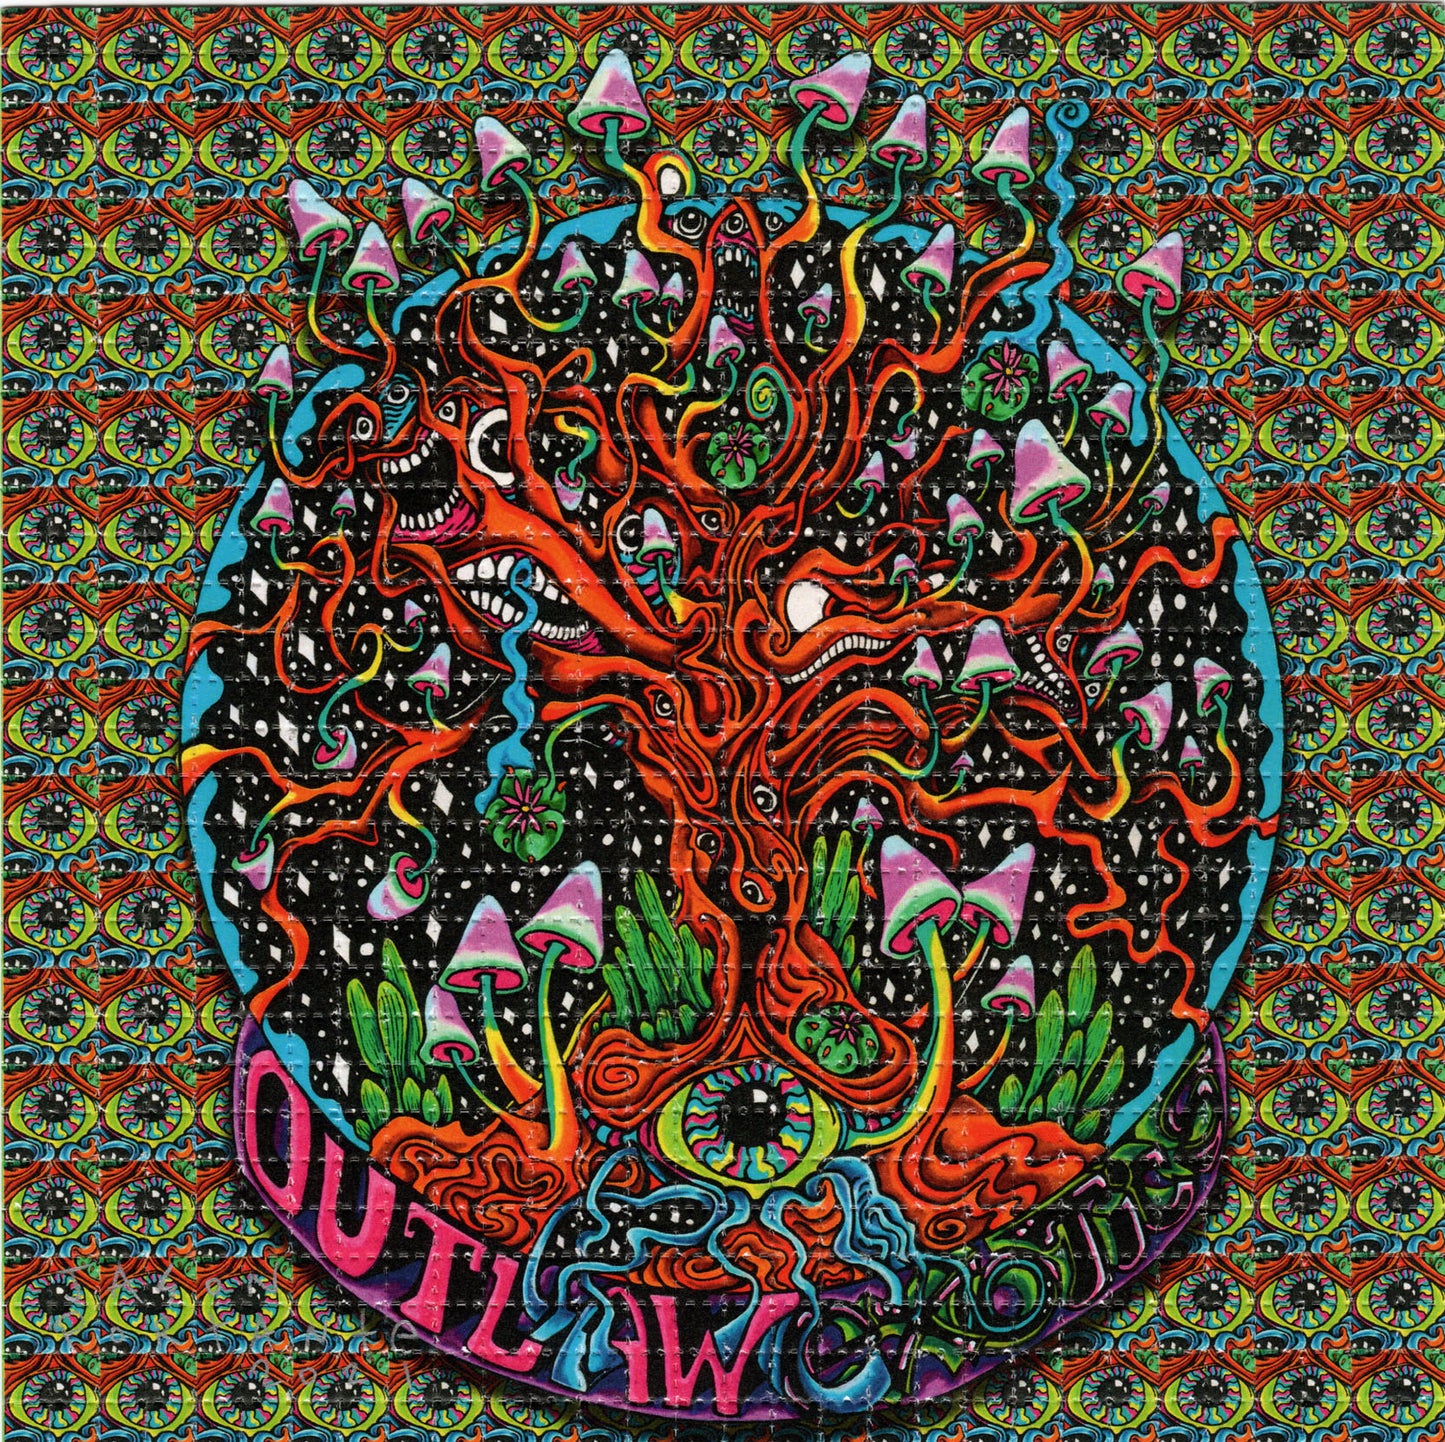 Outlaw Chronic ShroomTree by Jason Portante Signed Limited Edition LSD blotter art print